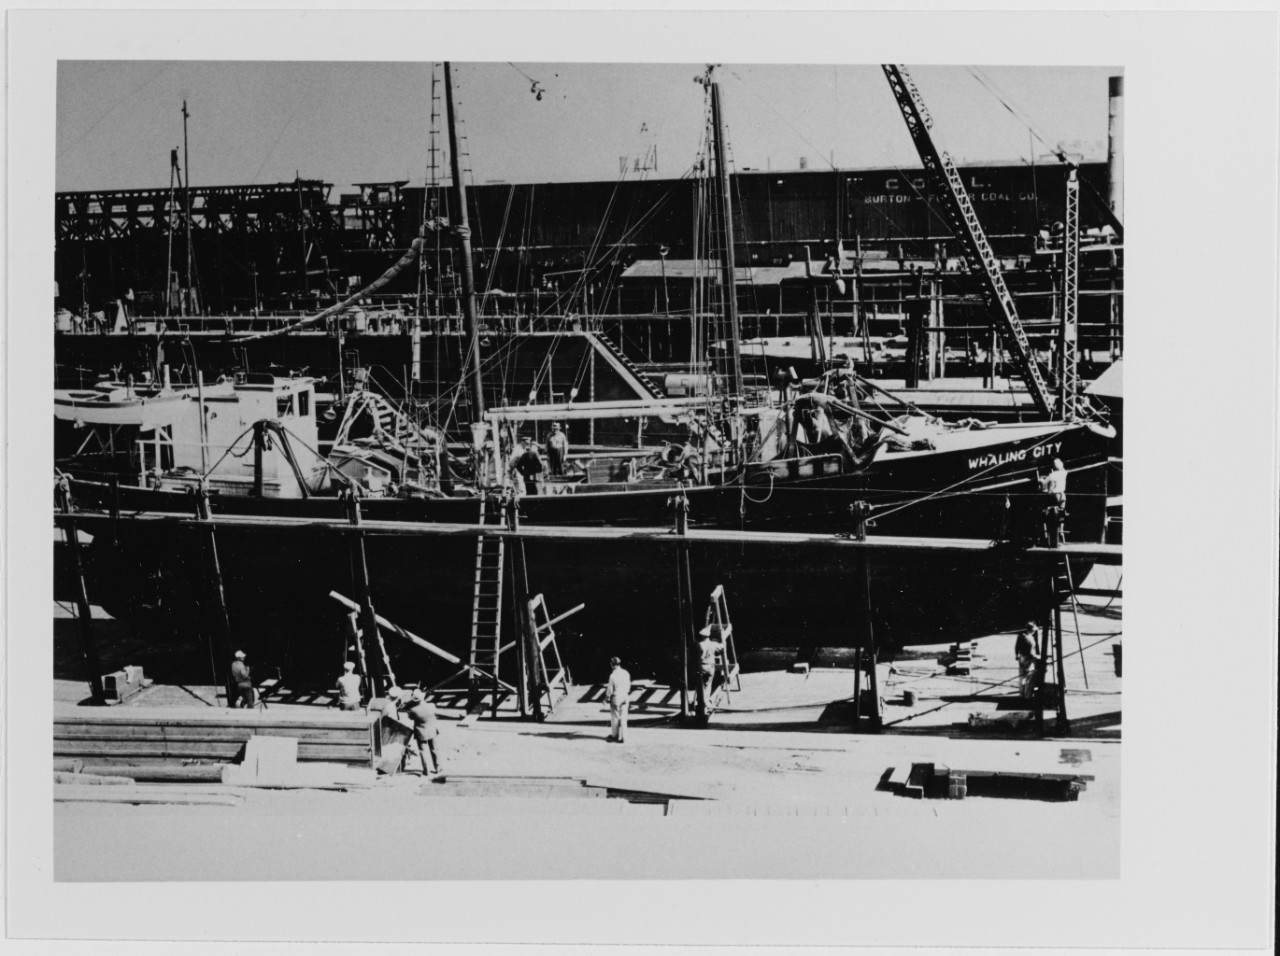 WHALING CITY (U.S. Fishing Vessel, 1936)